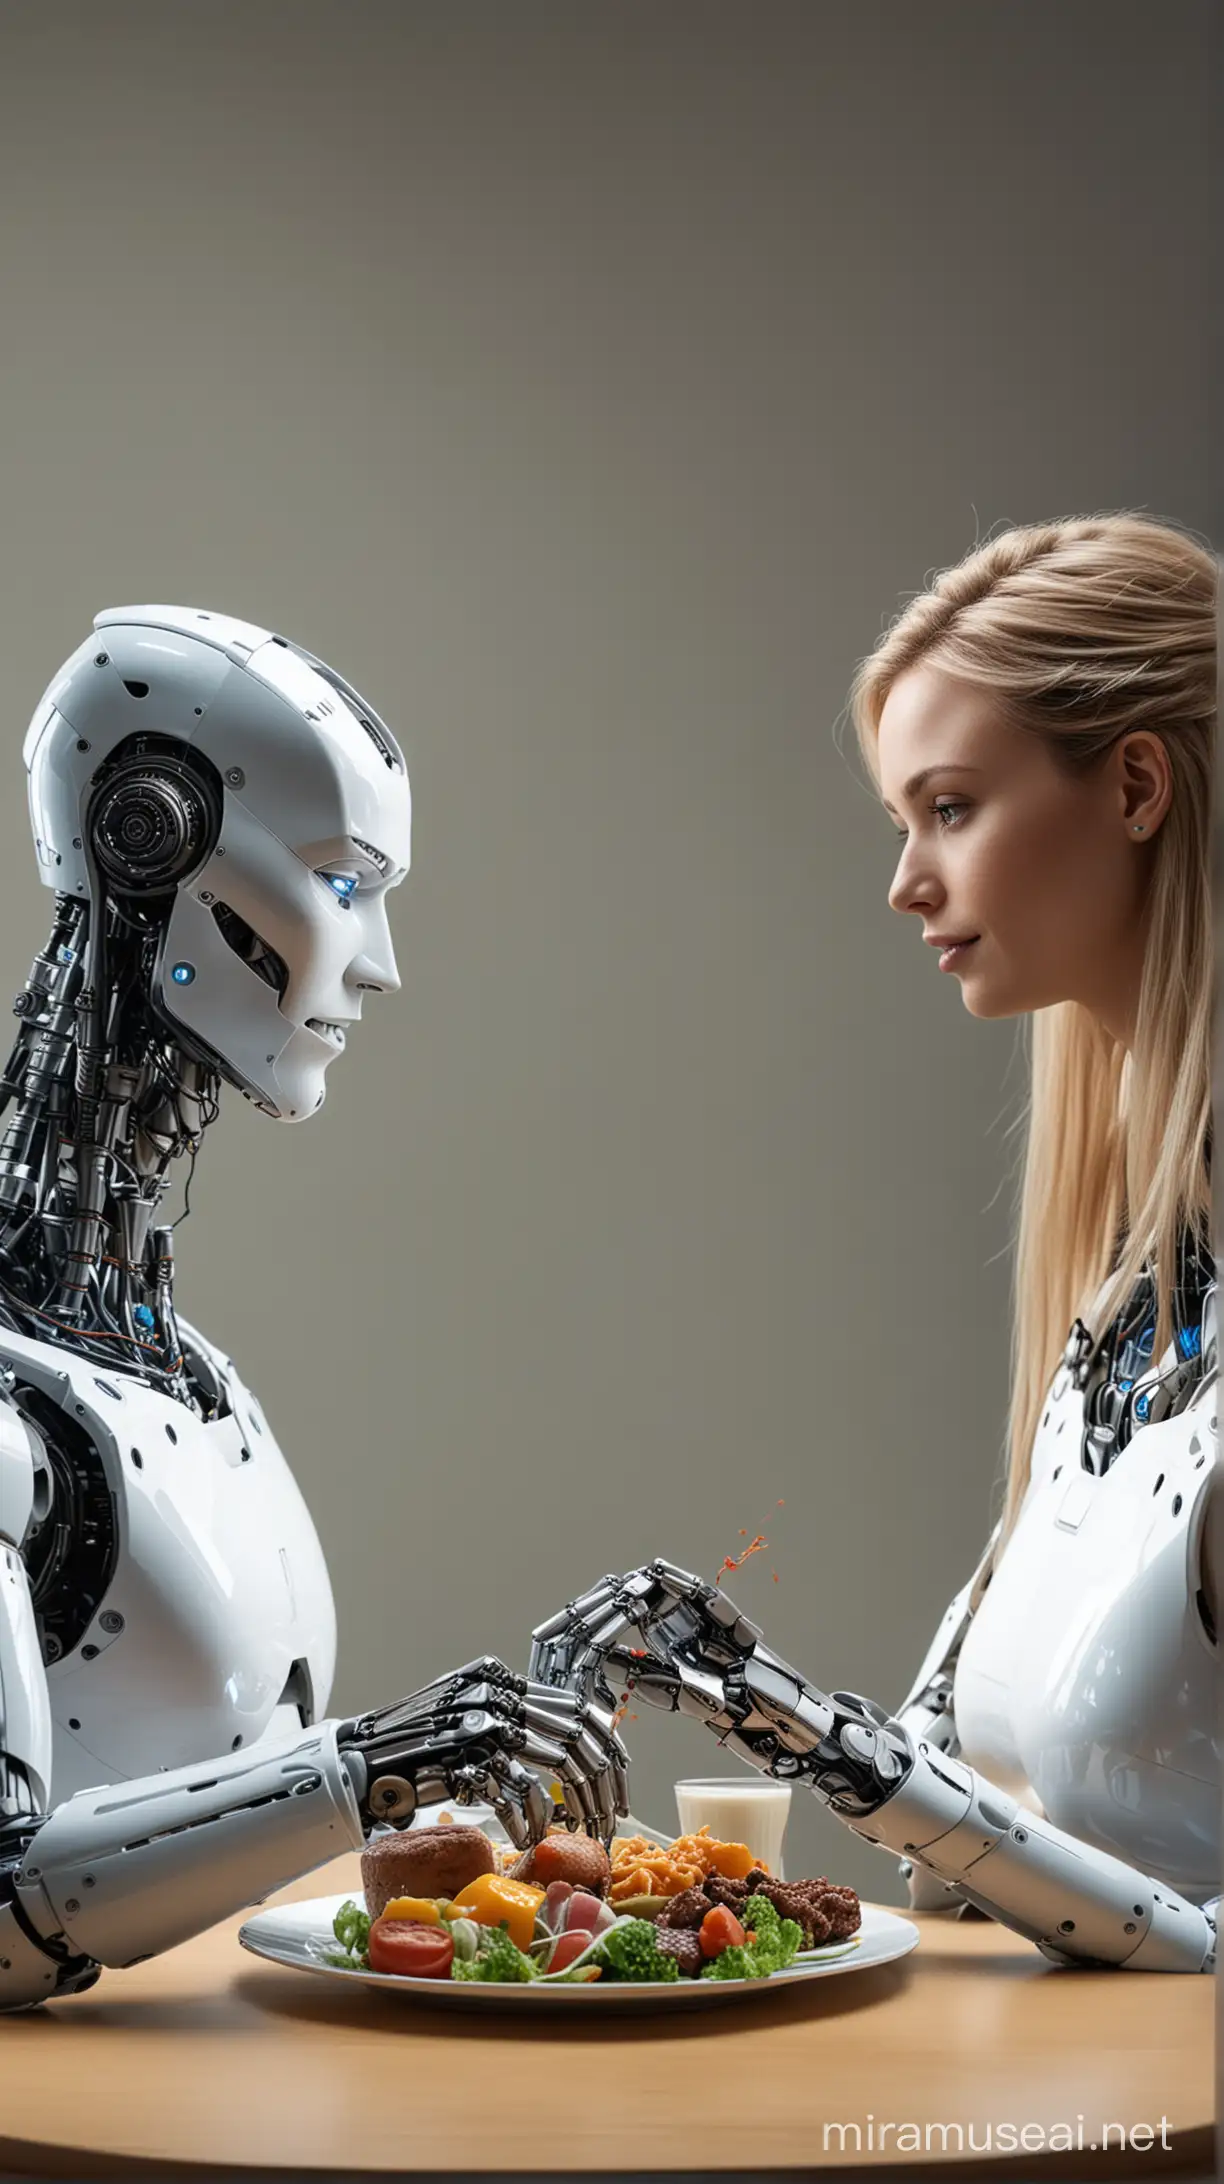 Robotic Duo and Human Pair Enjoying a Meal Together